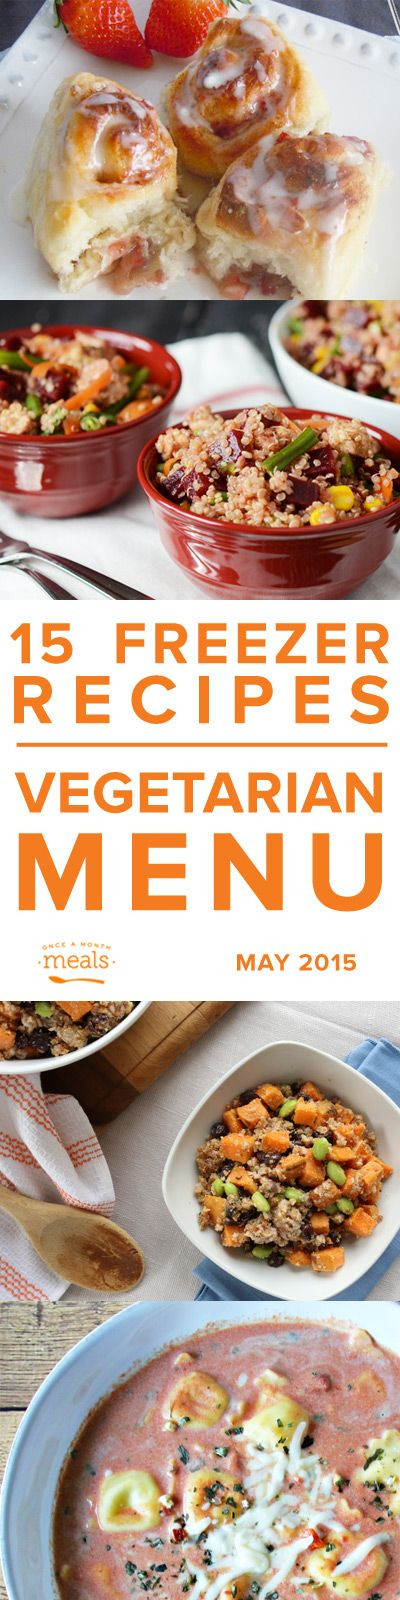 Vegan Freezer Recipes
 Ve arian May 2015 ce a Month Meals